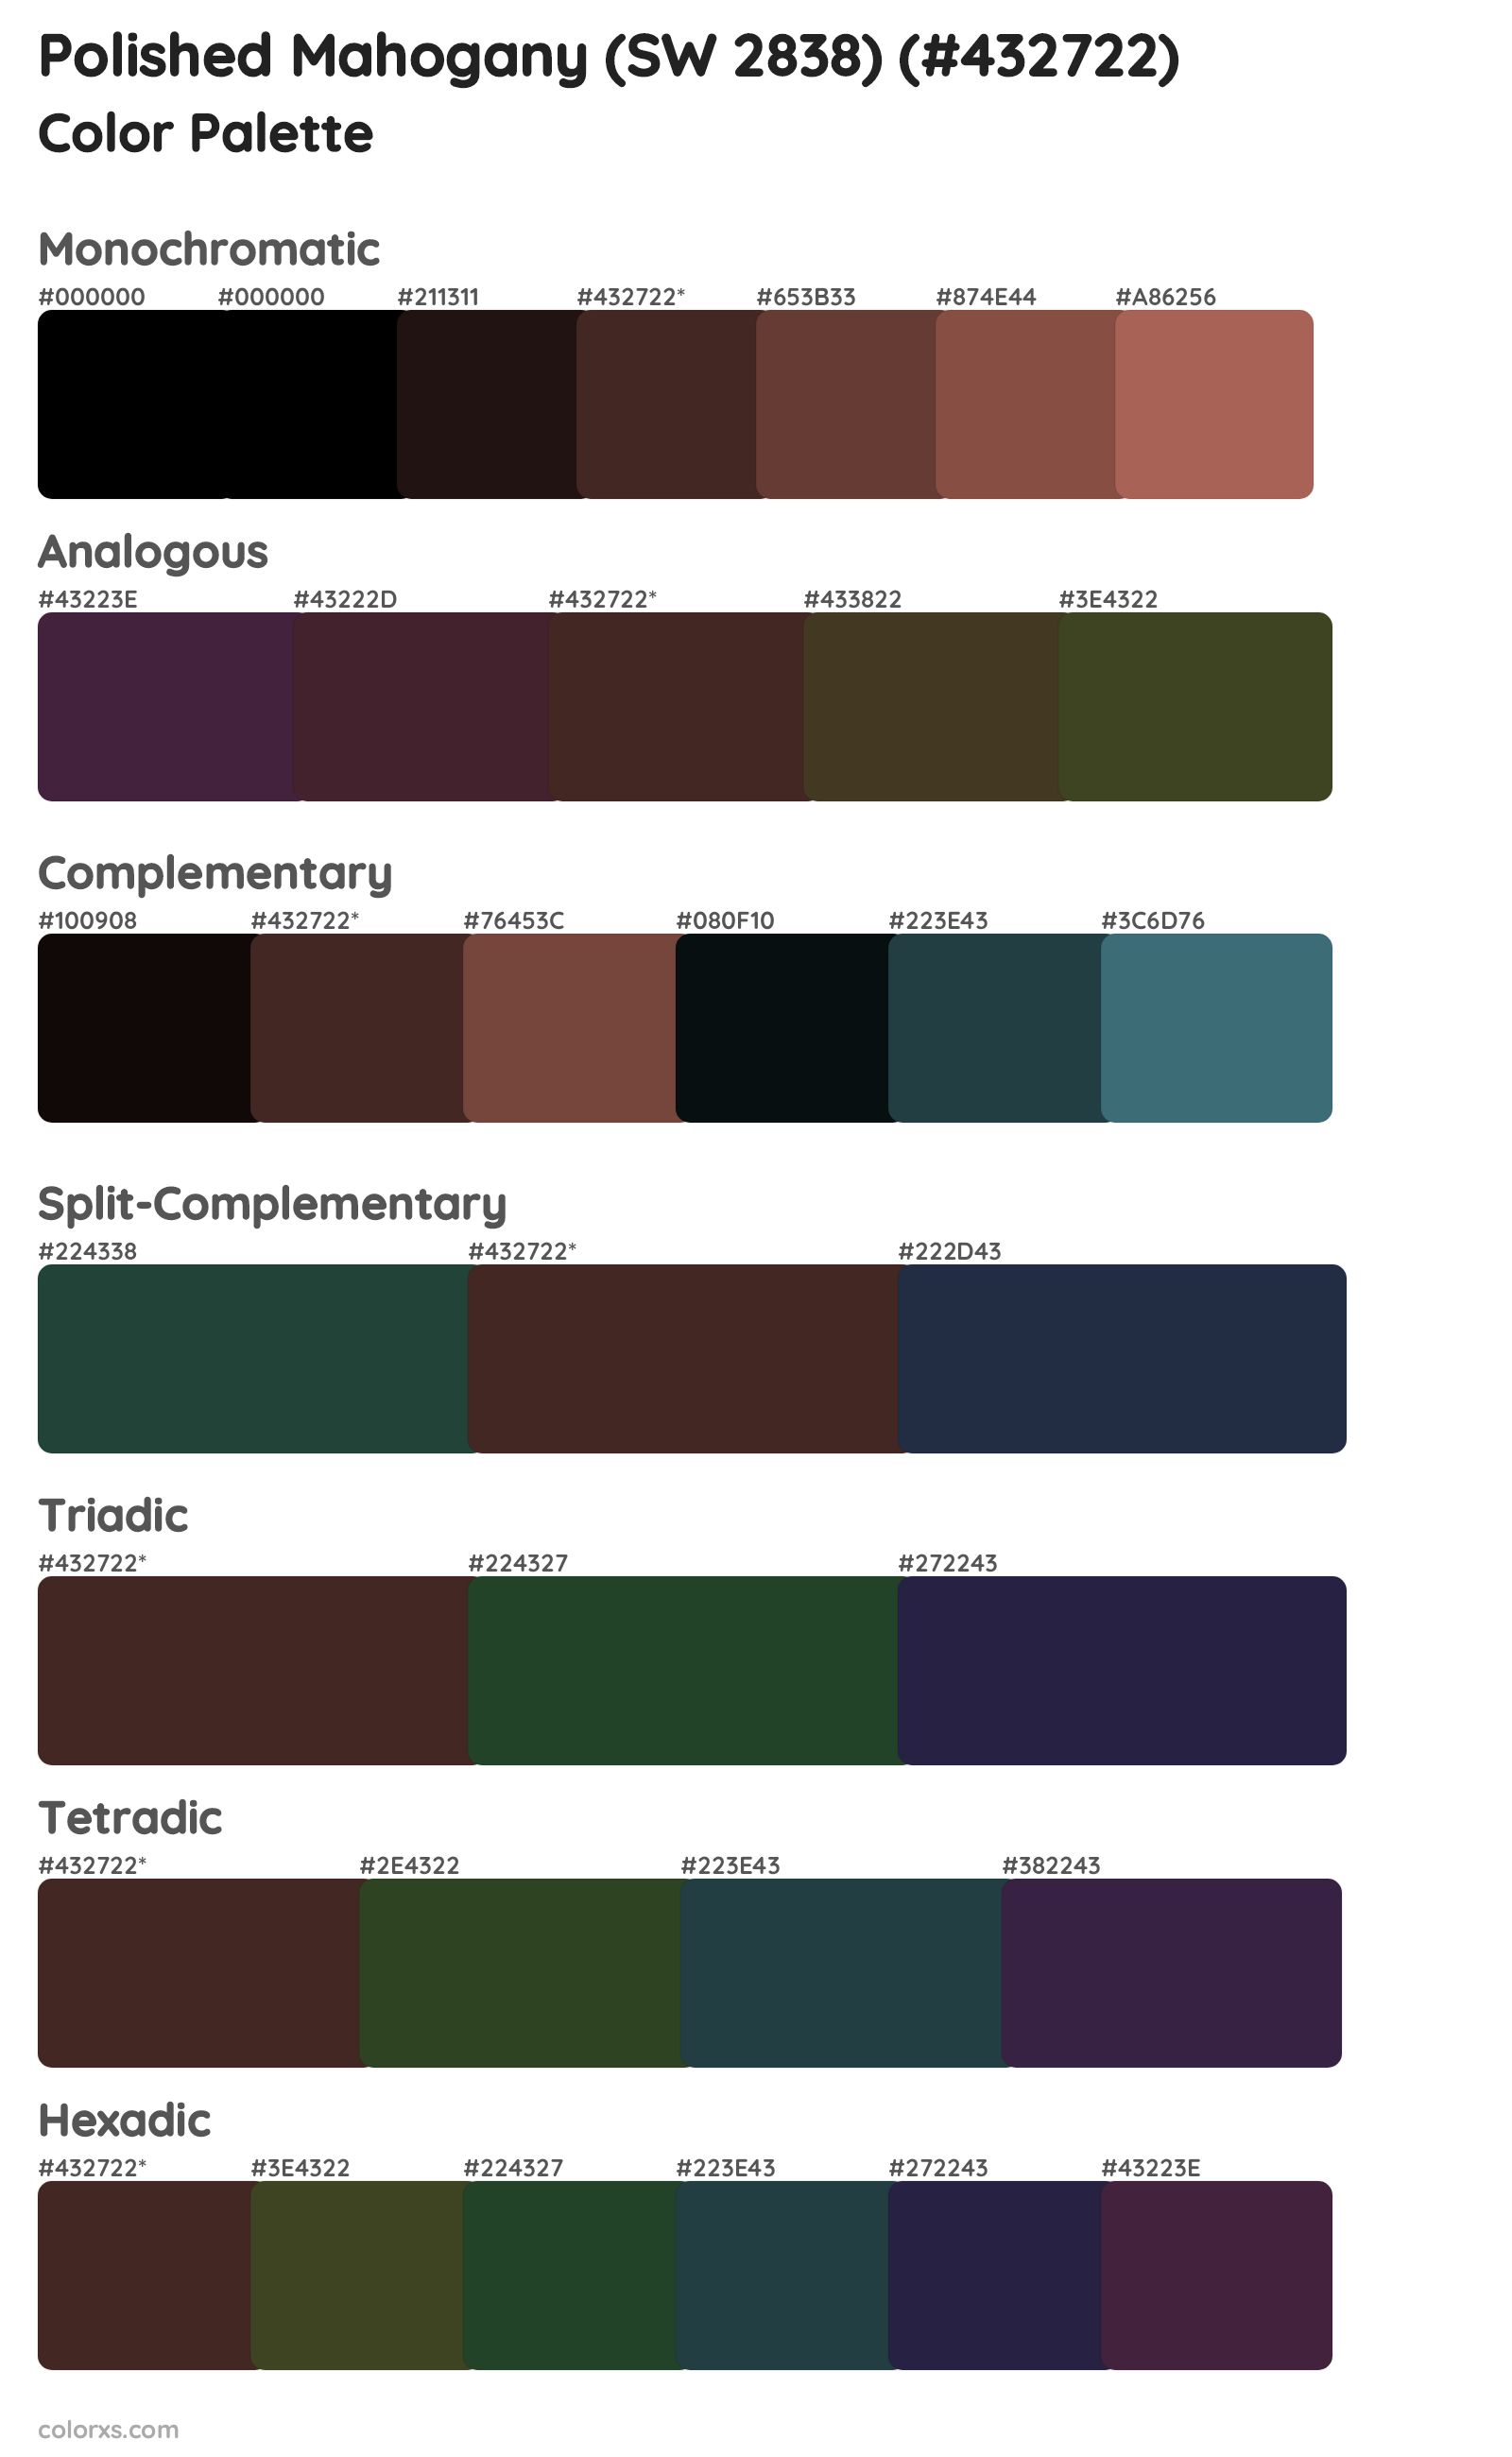 Polished Mahogany (SW 2838) Color Scheme Palettes